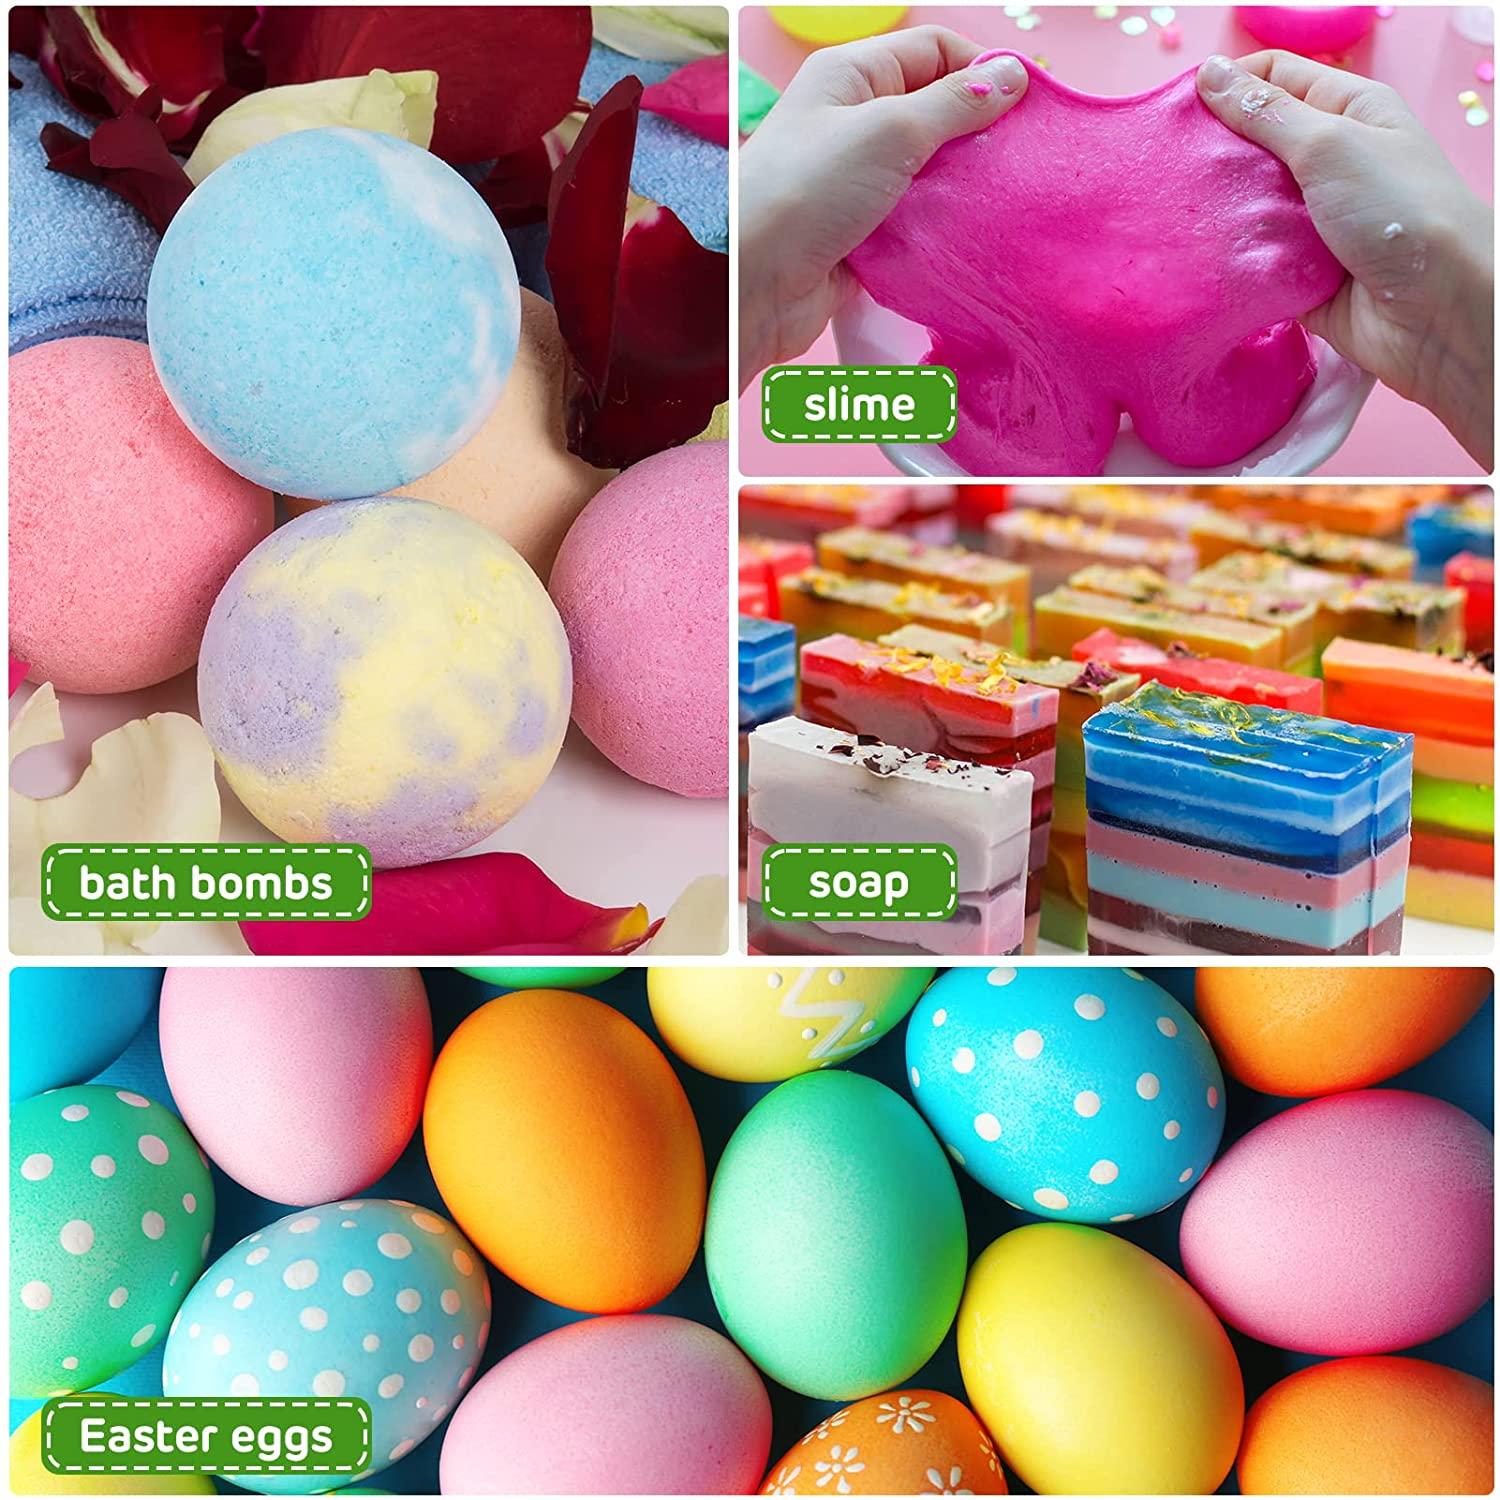 Eltin Food Coloring Set V1 - Gel Food Coloring Liquid for Baking | Edible Food Dye Coloring for Cake Decorating, Cookie Decorating, Slime | Easter